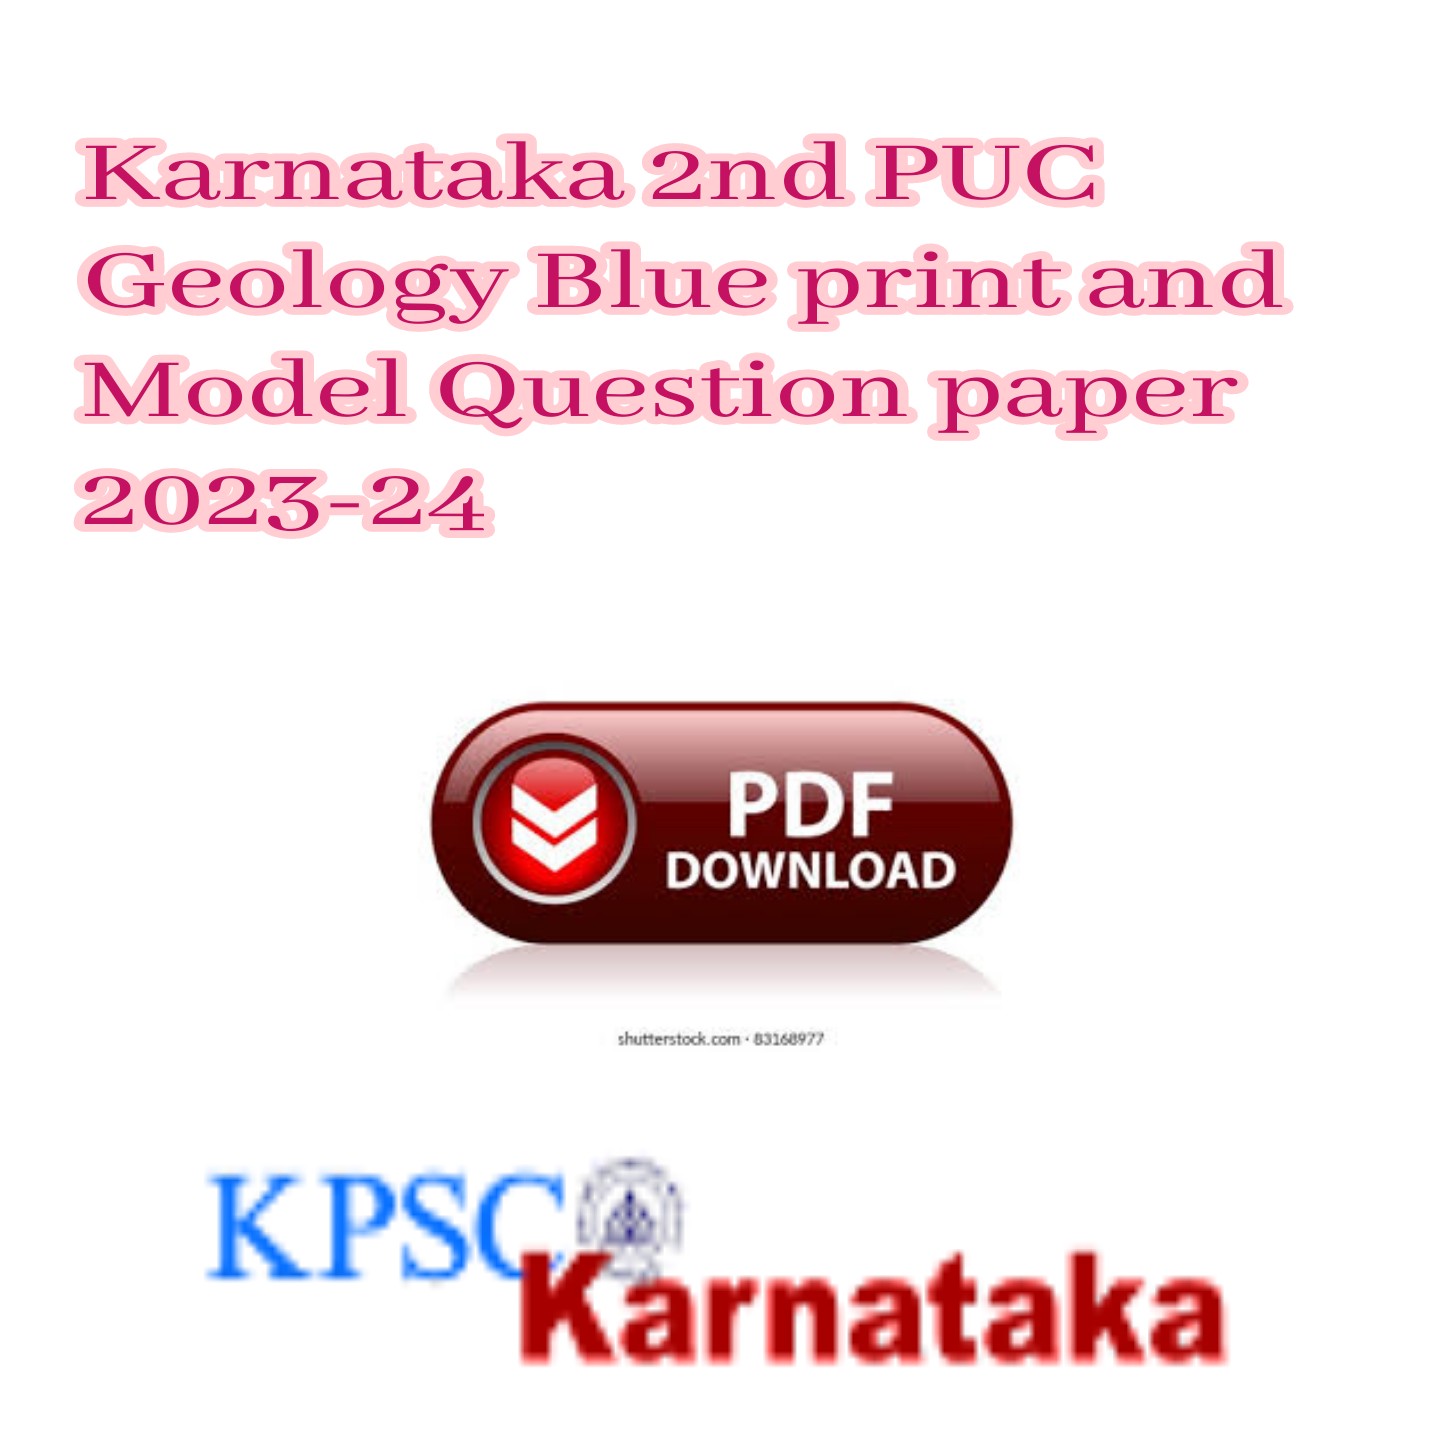 Karnataka 2nd PUC Geology Blue print and Model Question paper 2023-24